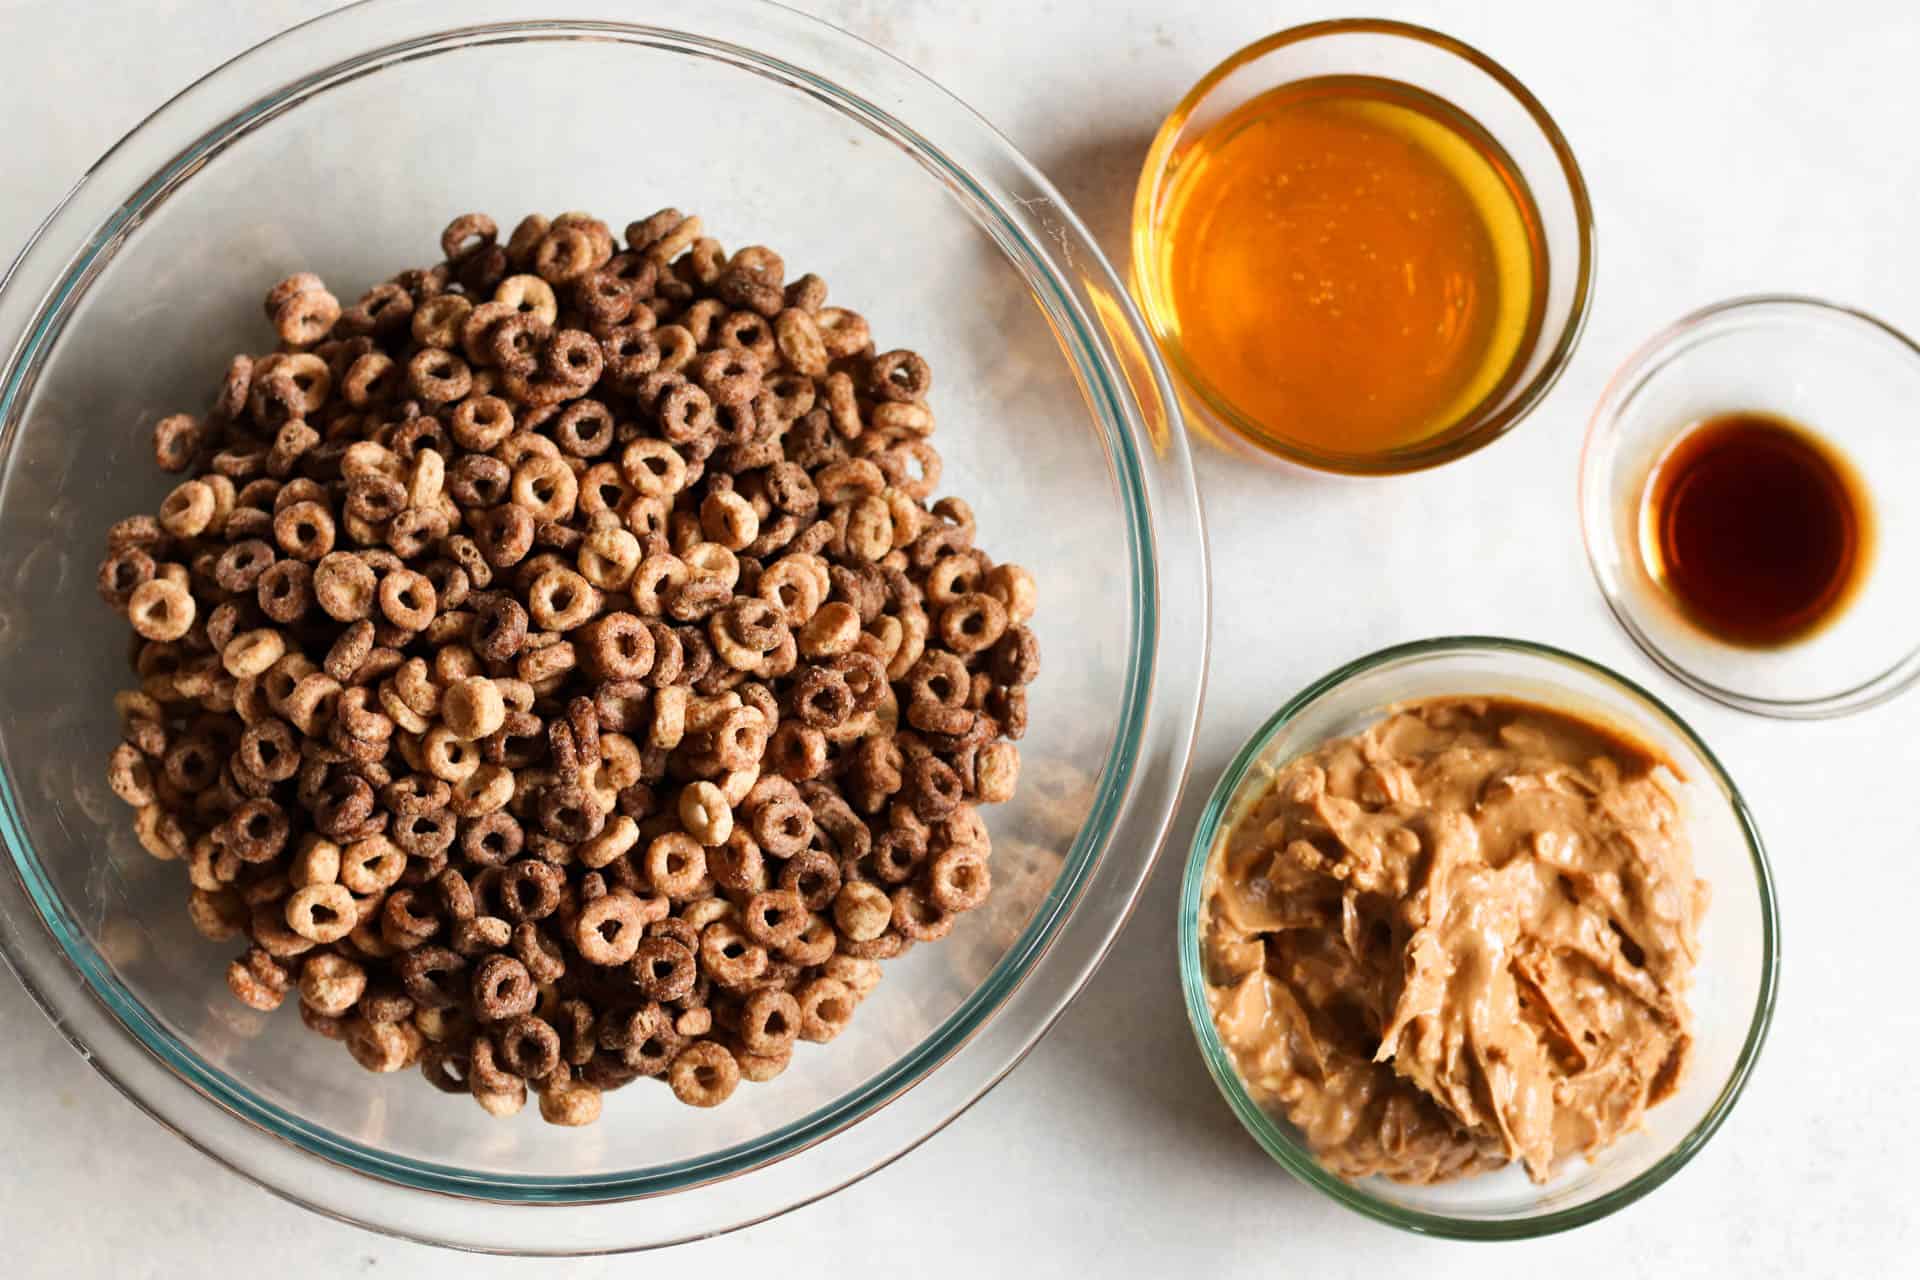 Honey Nut Cheerio Balls - Peanut Butter Cheerio Treats - Only 4 Ingredients